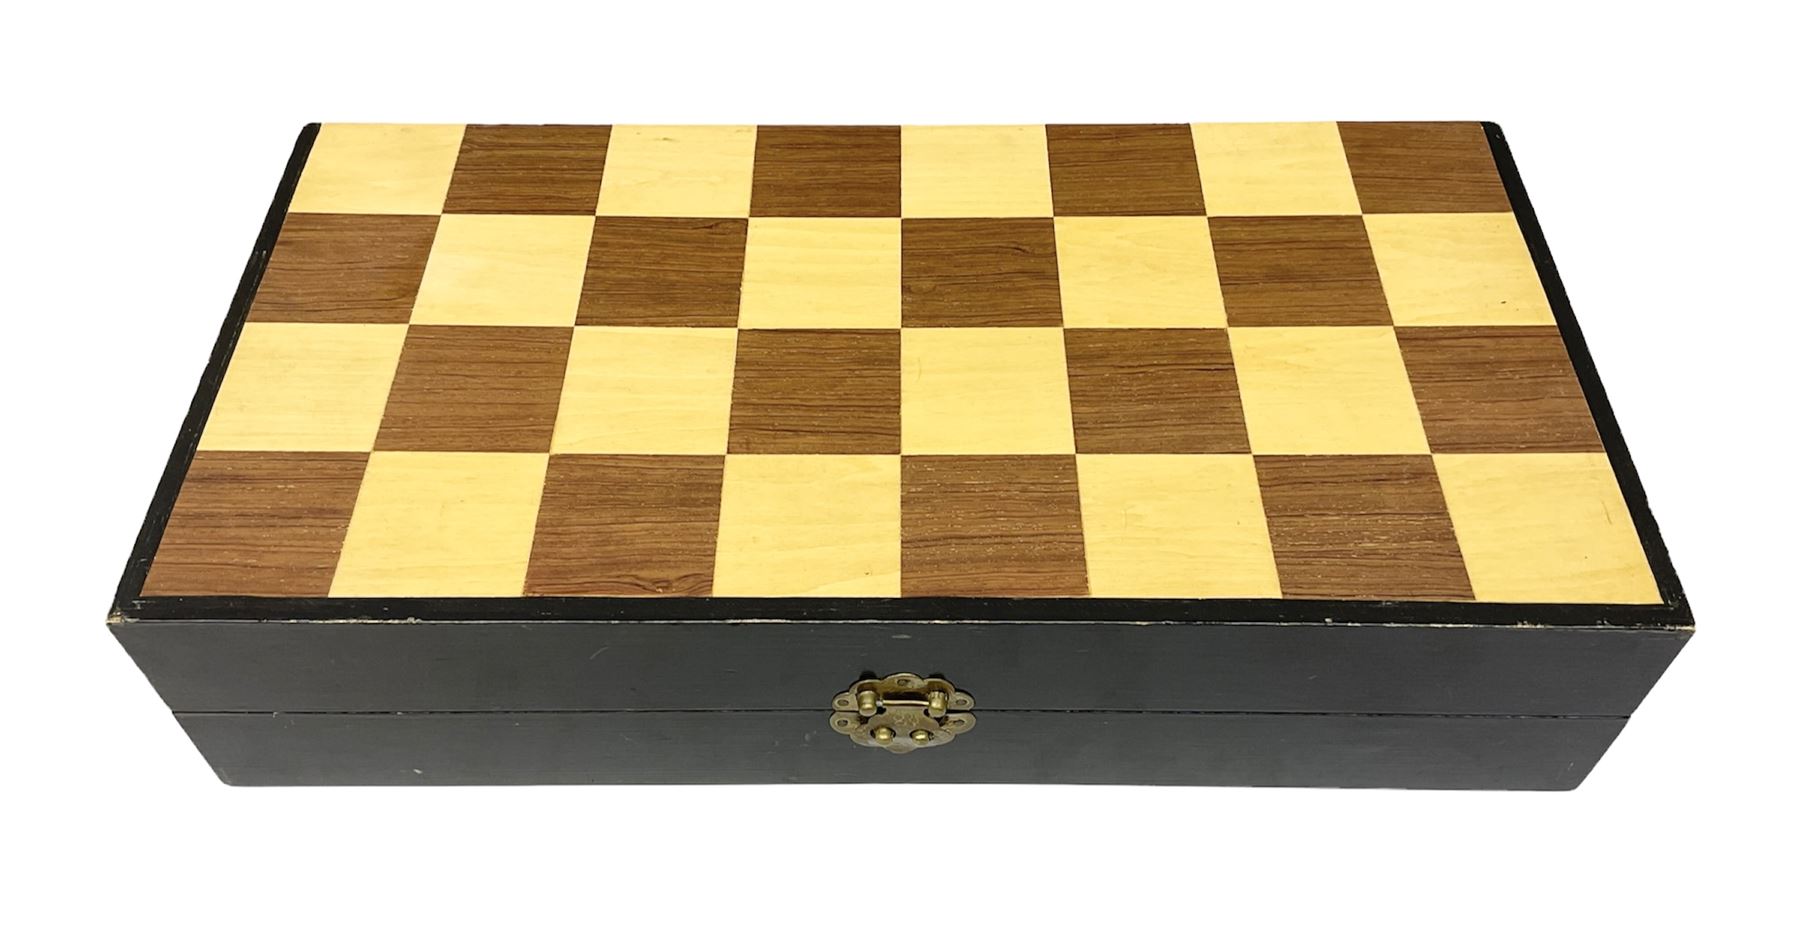 Chinese style chess set and folding storage board